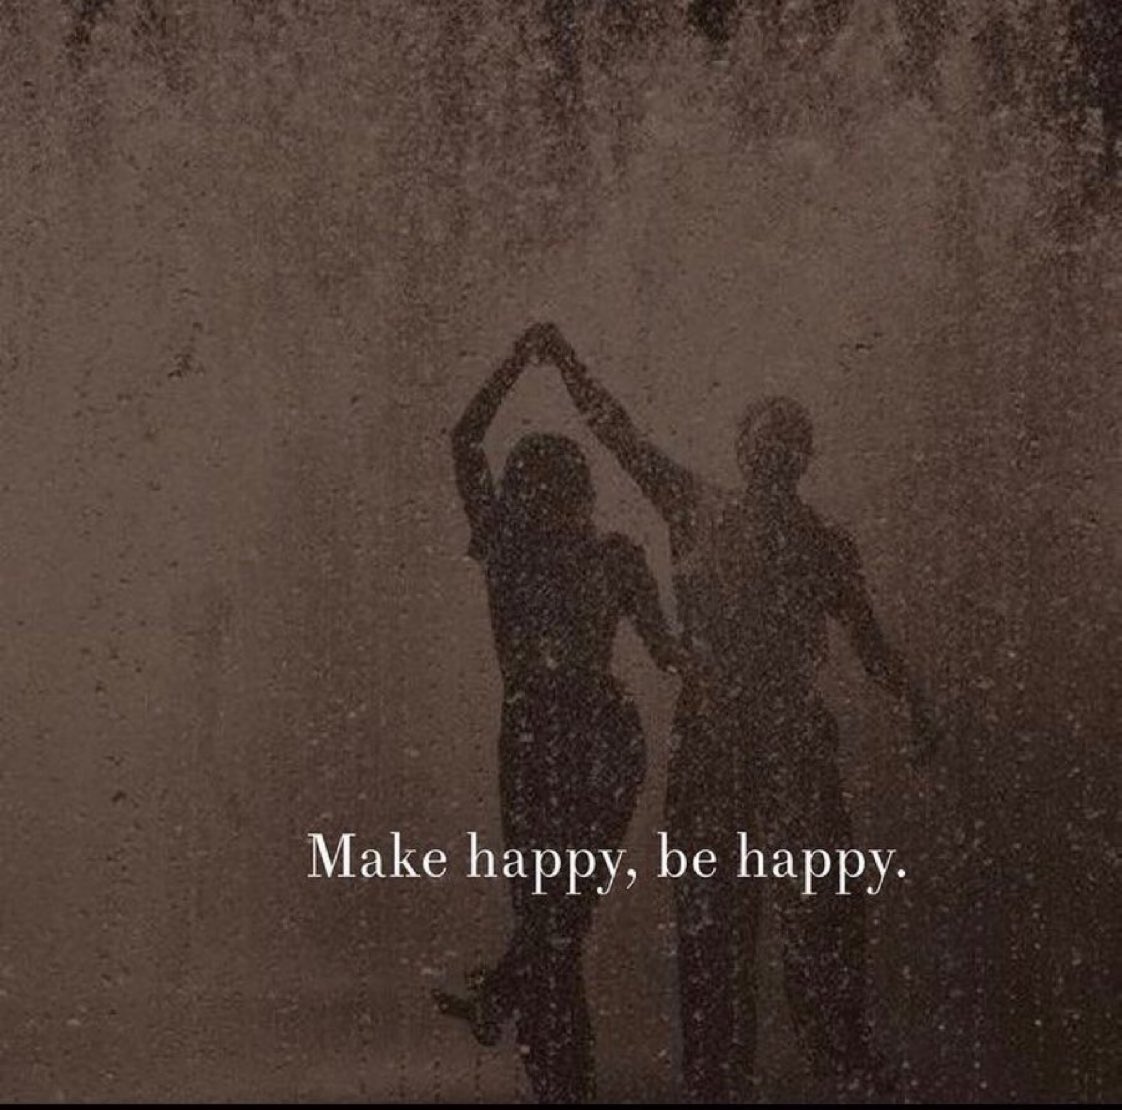 “Mutlu et, mutlu ol.”